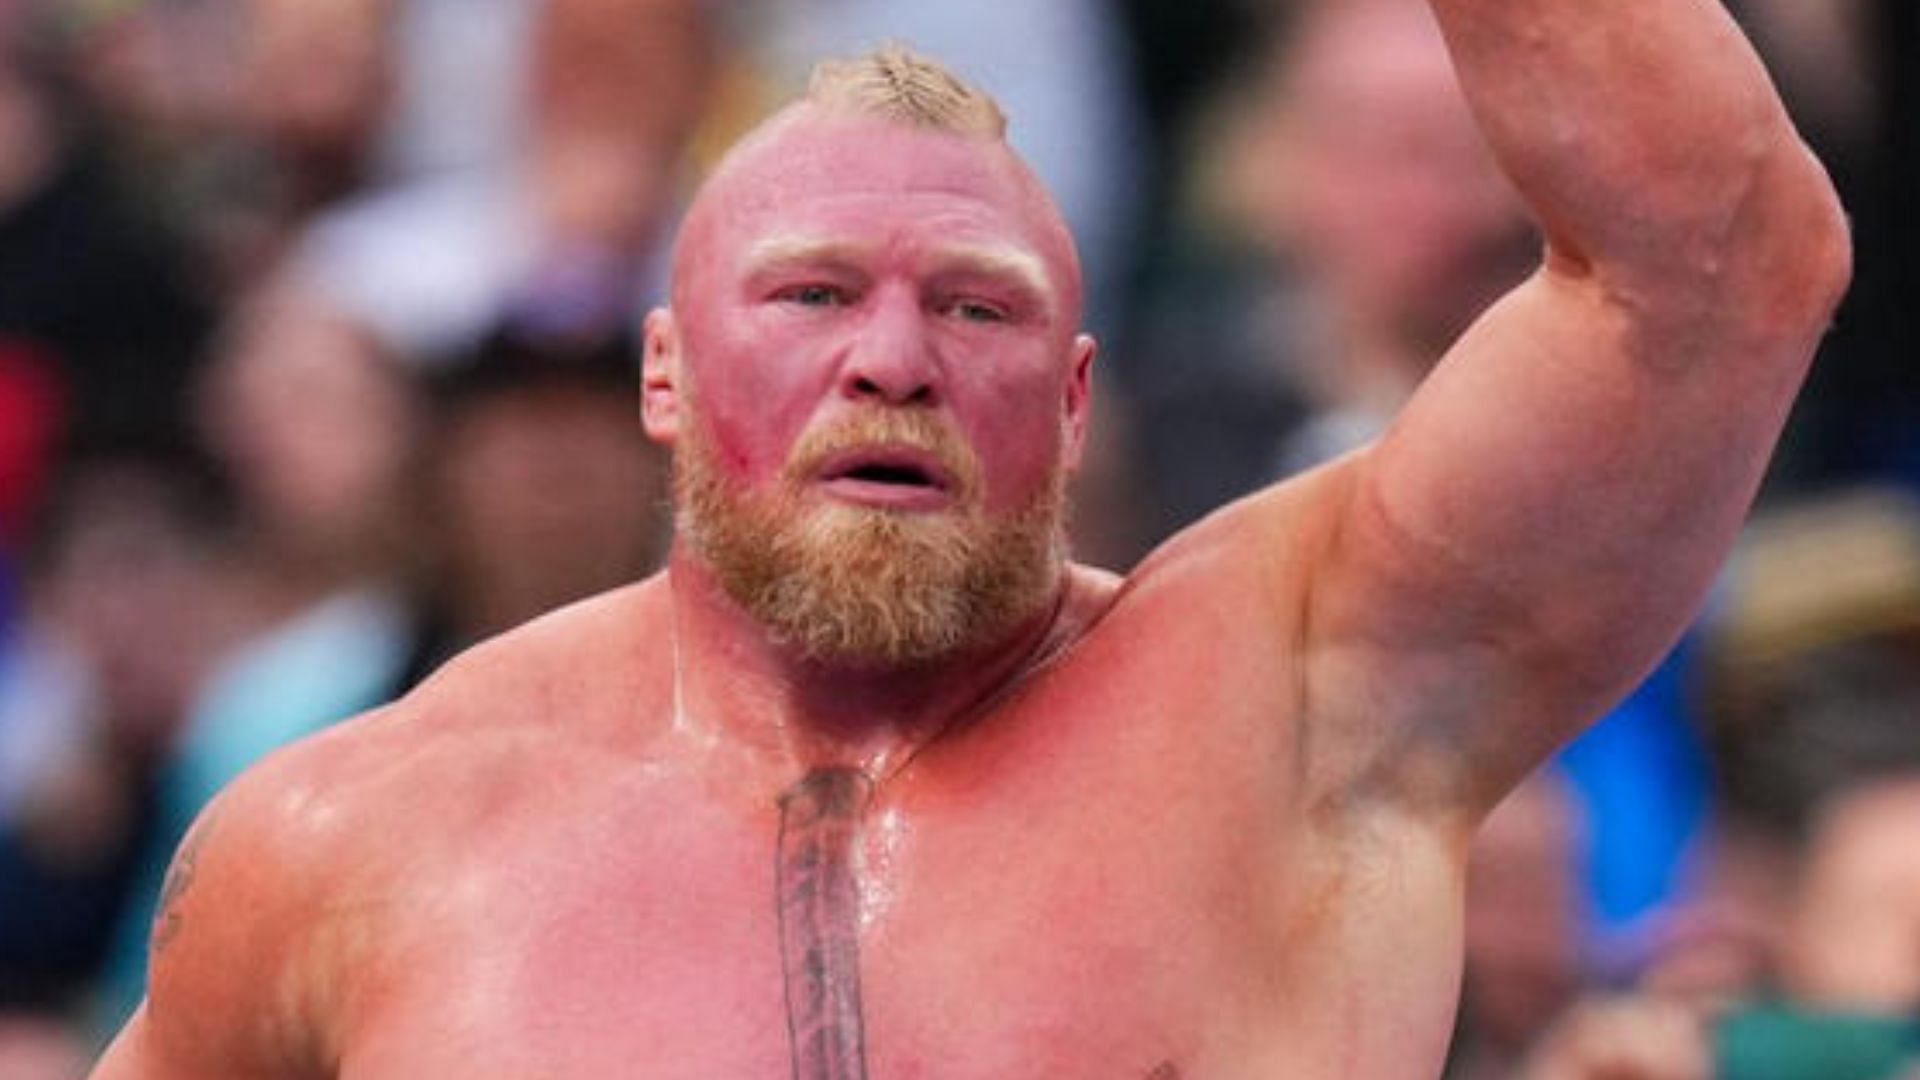 Will Brock Lesnar resurface in WWE?